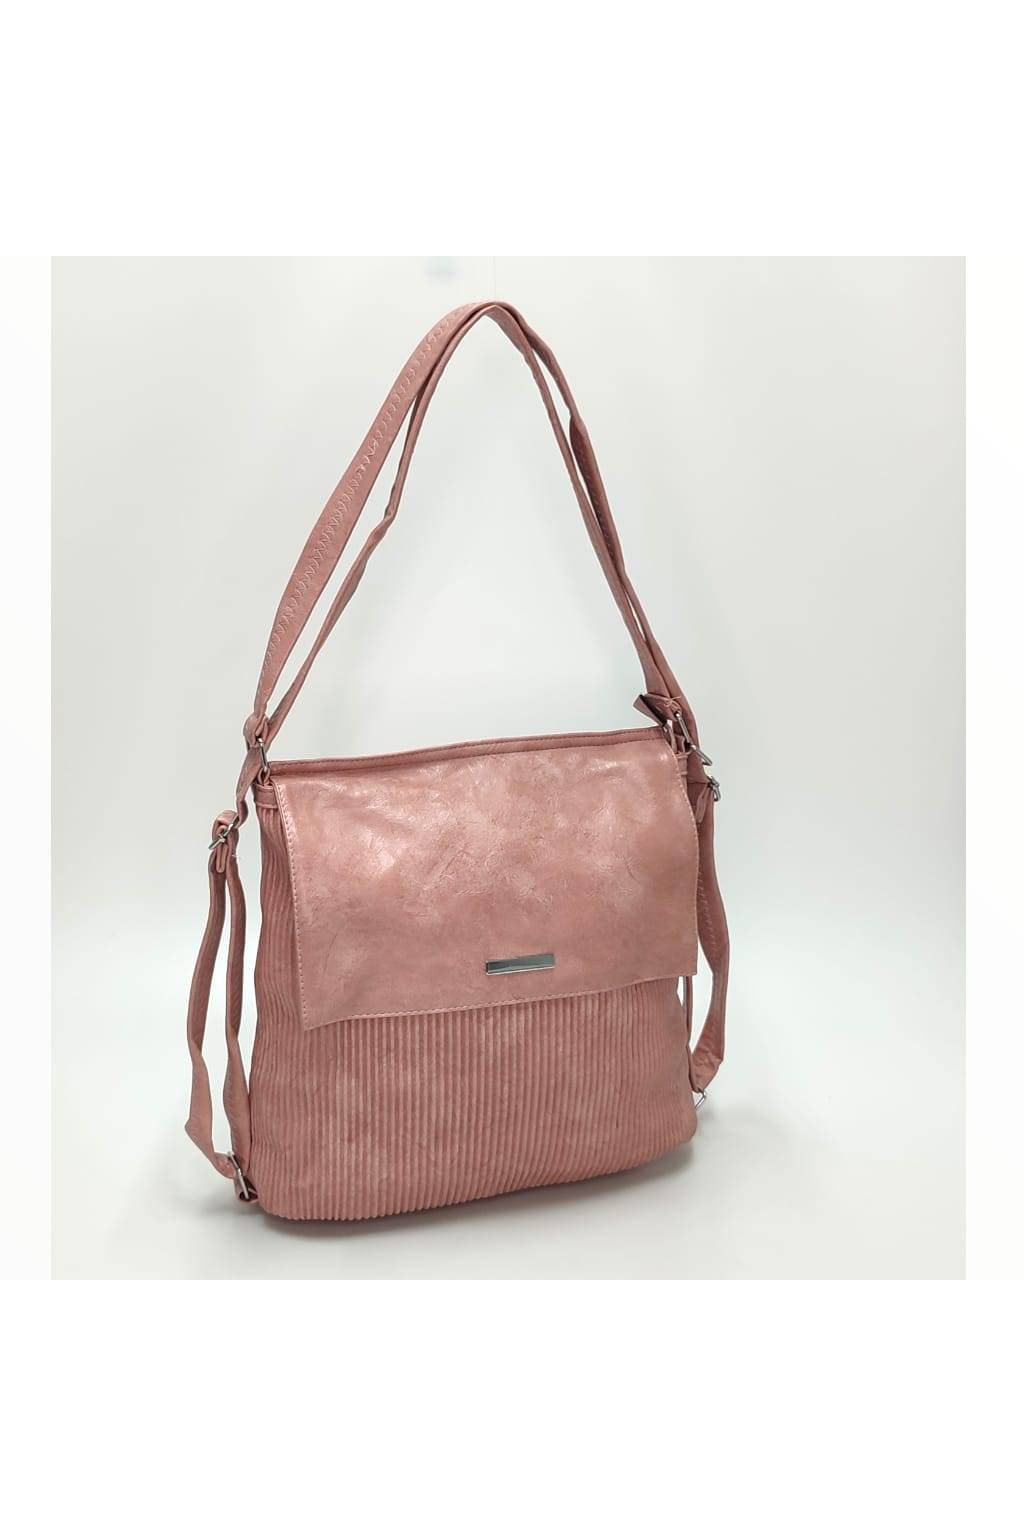 Dámska kabelka ruksak 2v1 S1822 ružová www.kabelky vypredaj (25)